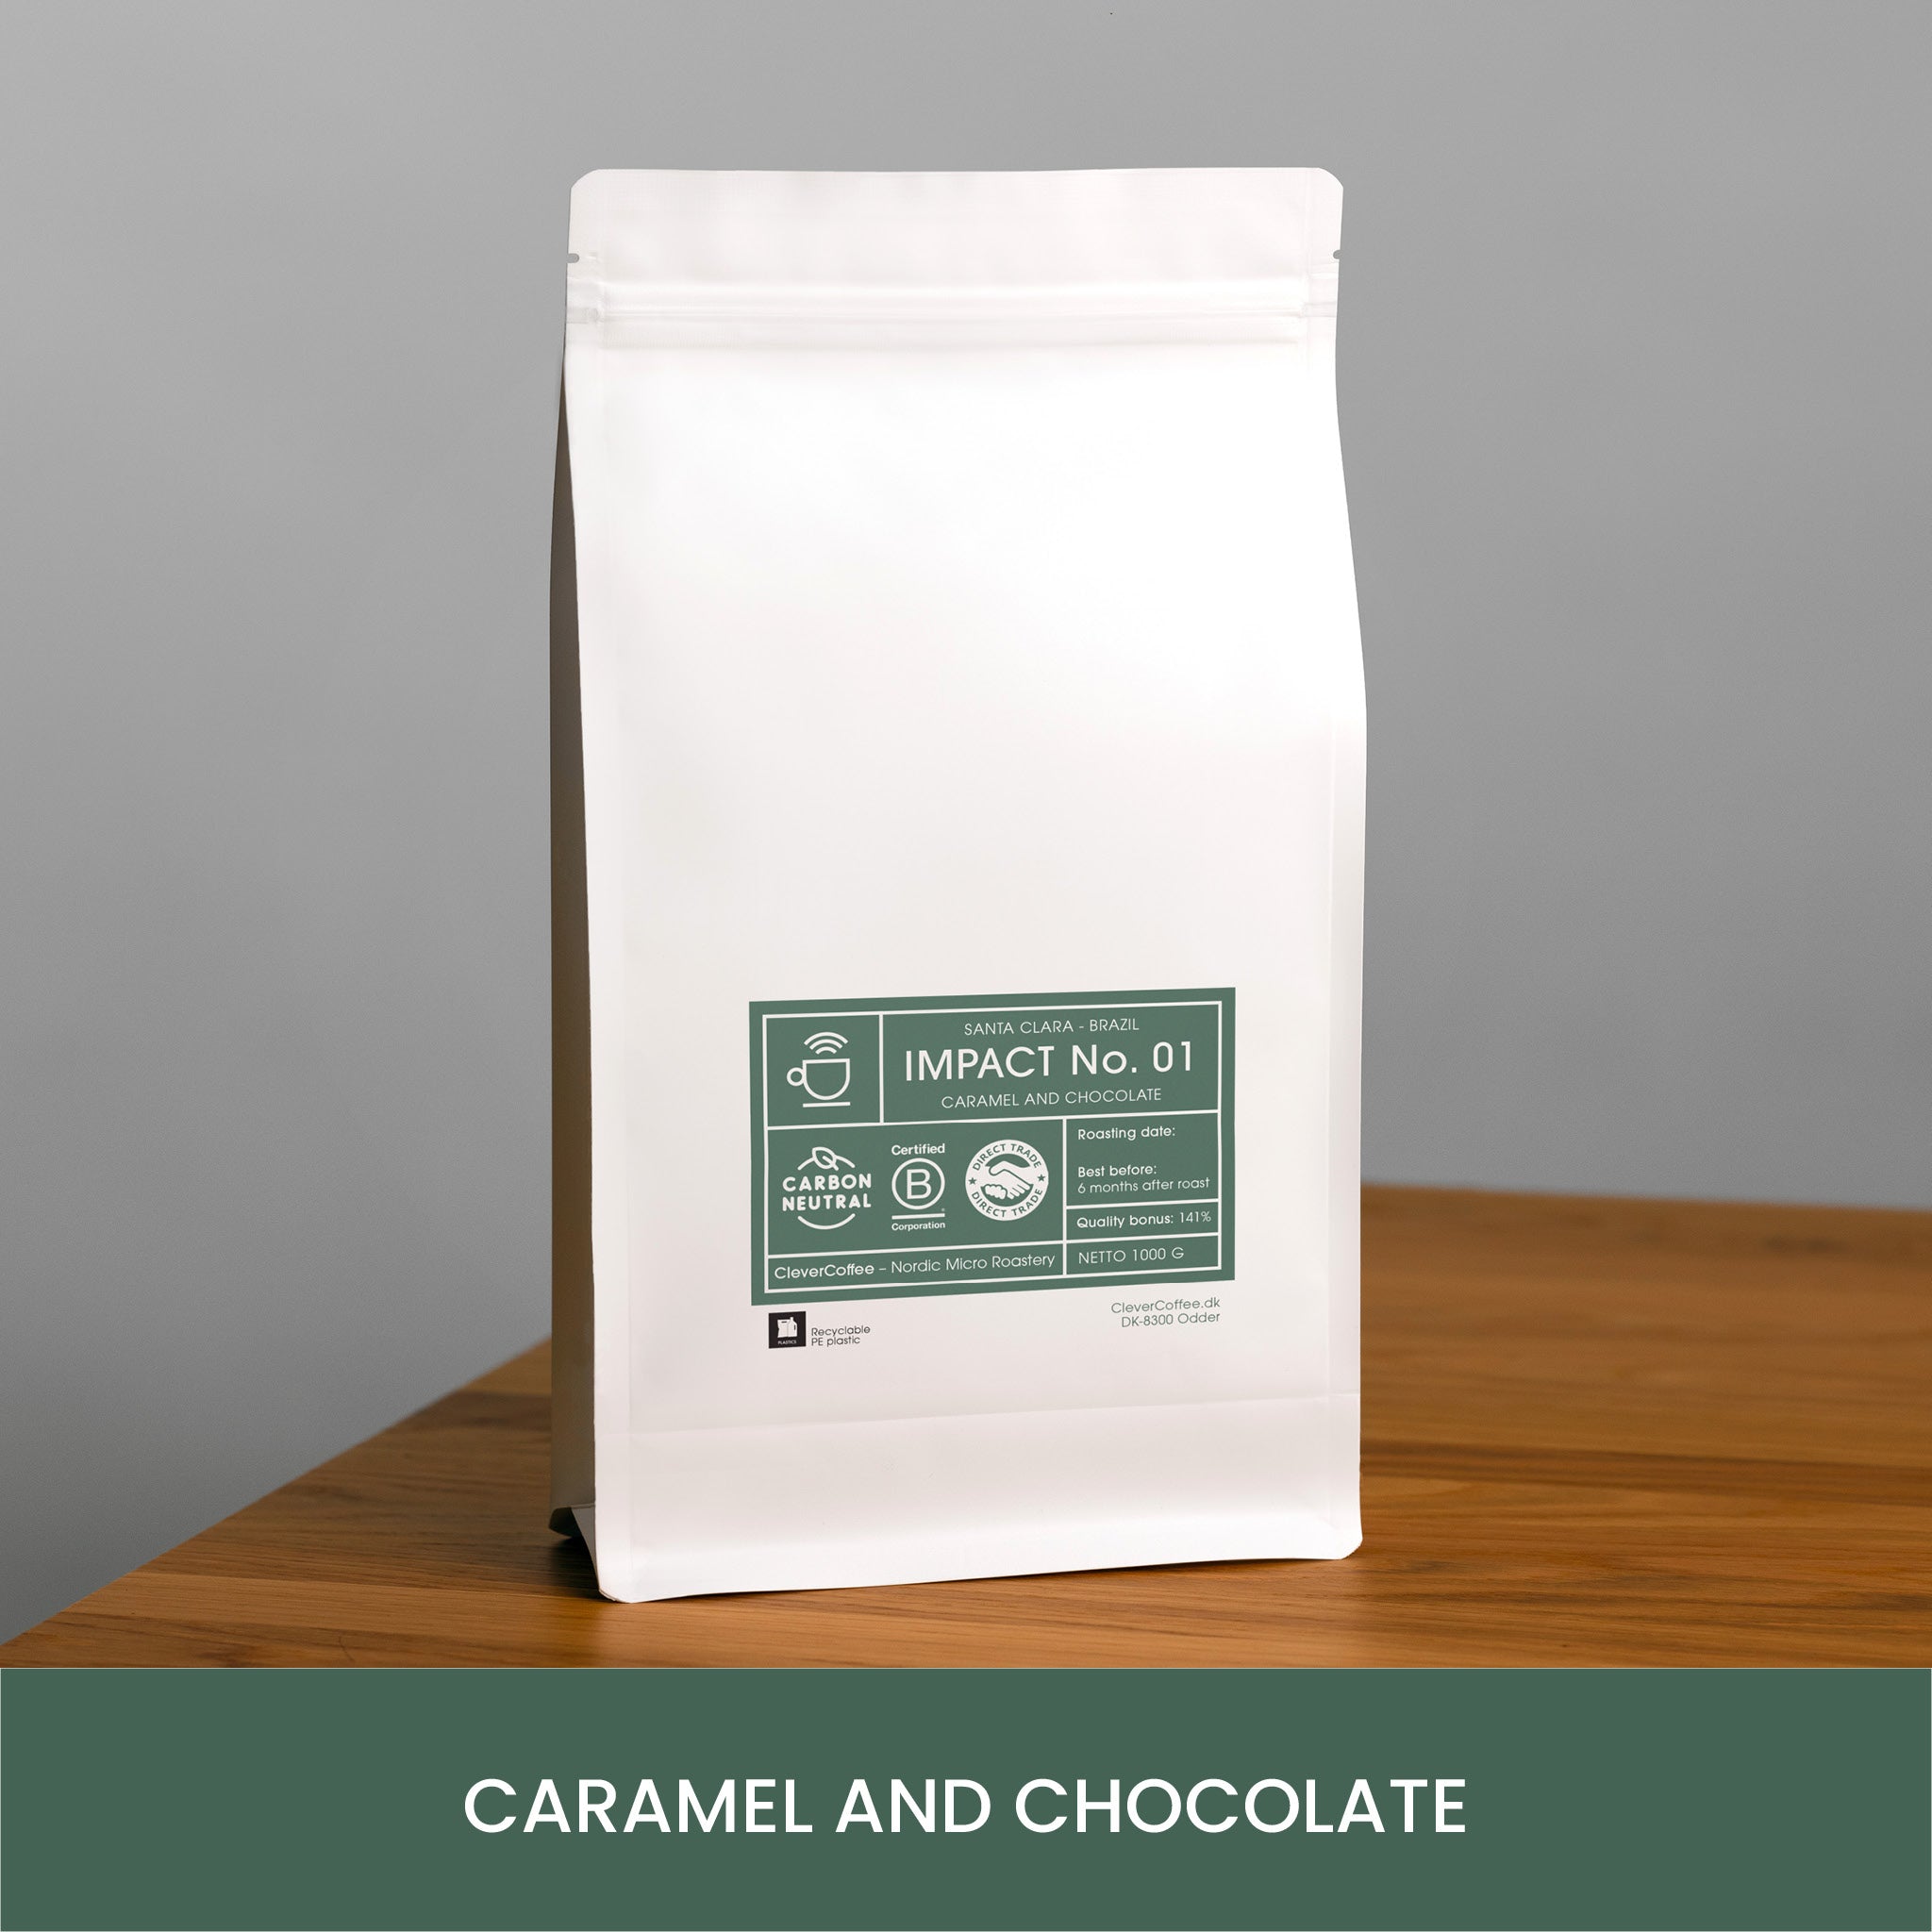 1 kg kaffepose, impact no. 01, caramel og chokolade, co2 neutral, b corp, direkte handlet 